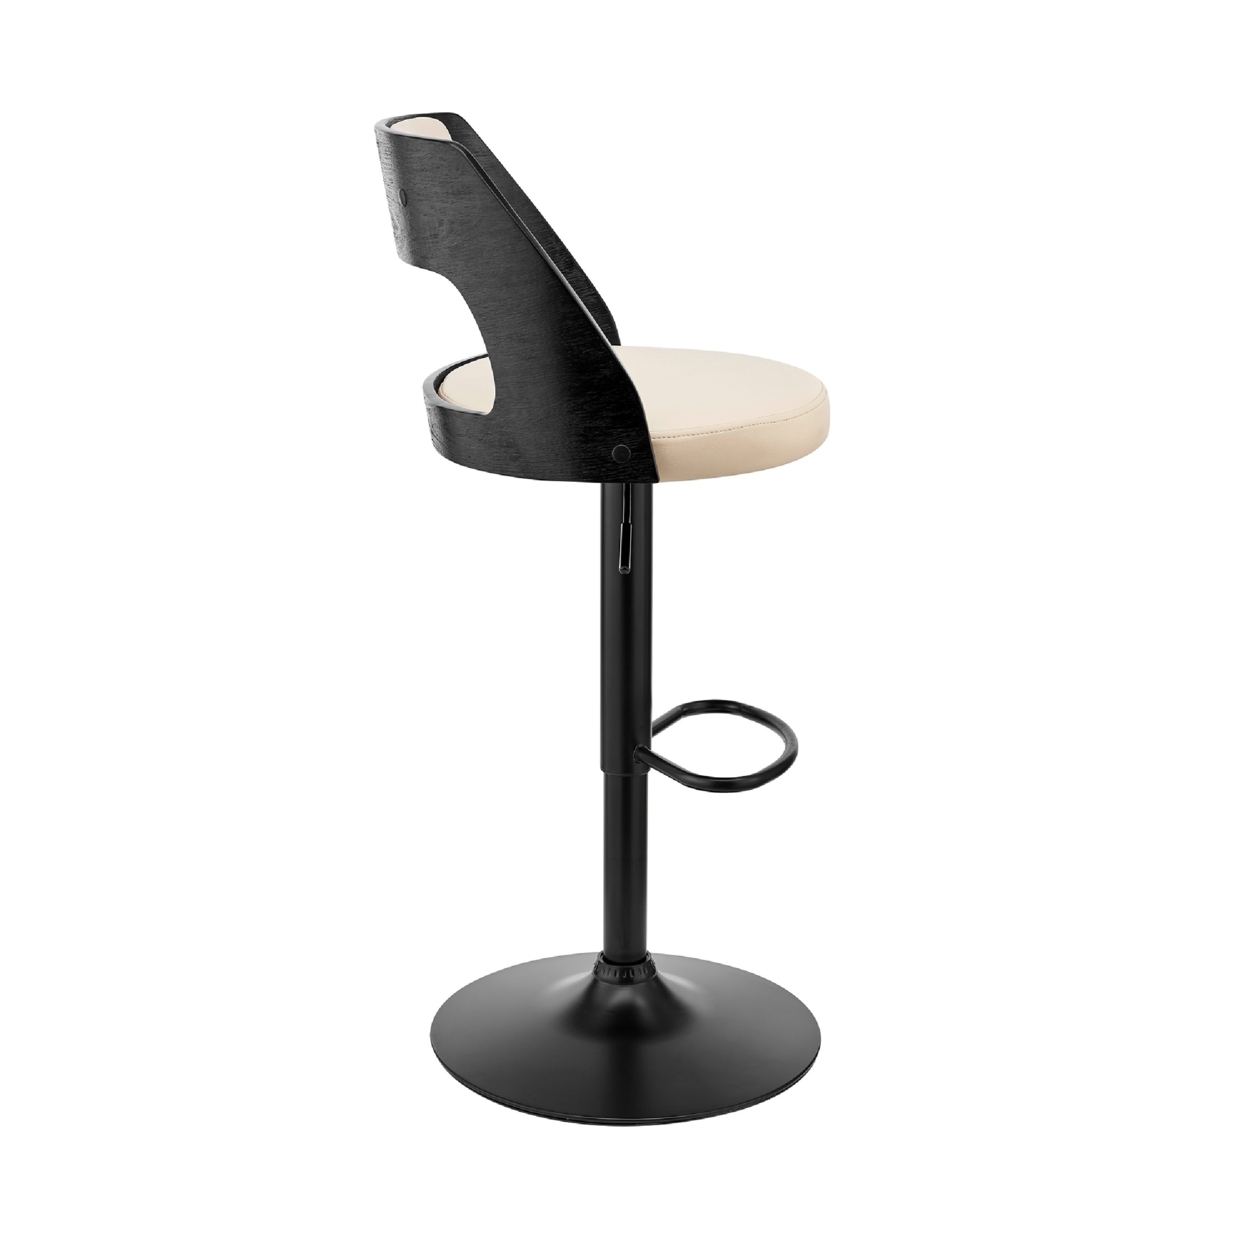 Adjustable Barstool With Open Design Wooden Back, Black And Cream- Saltoro Sherpi